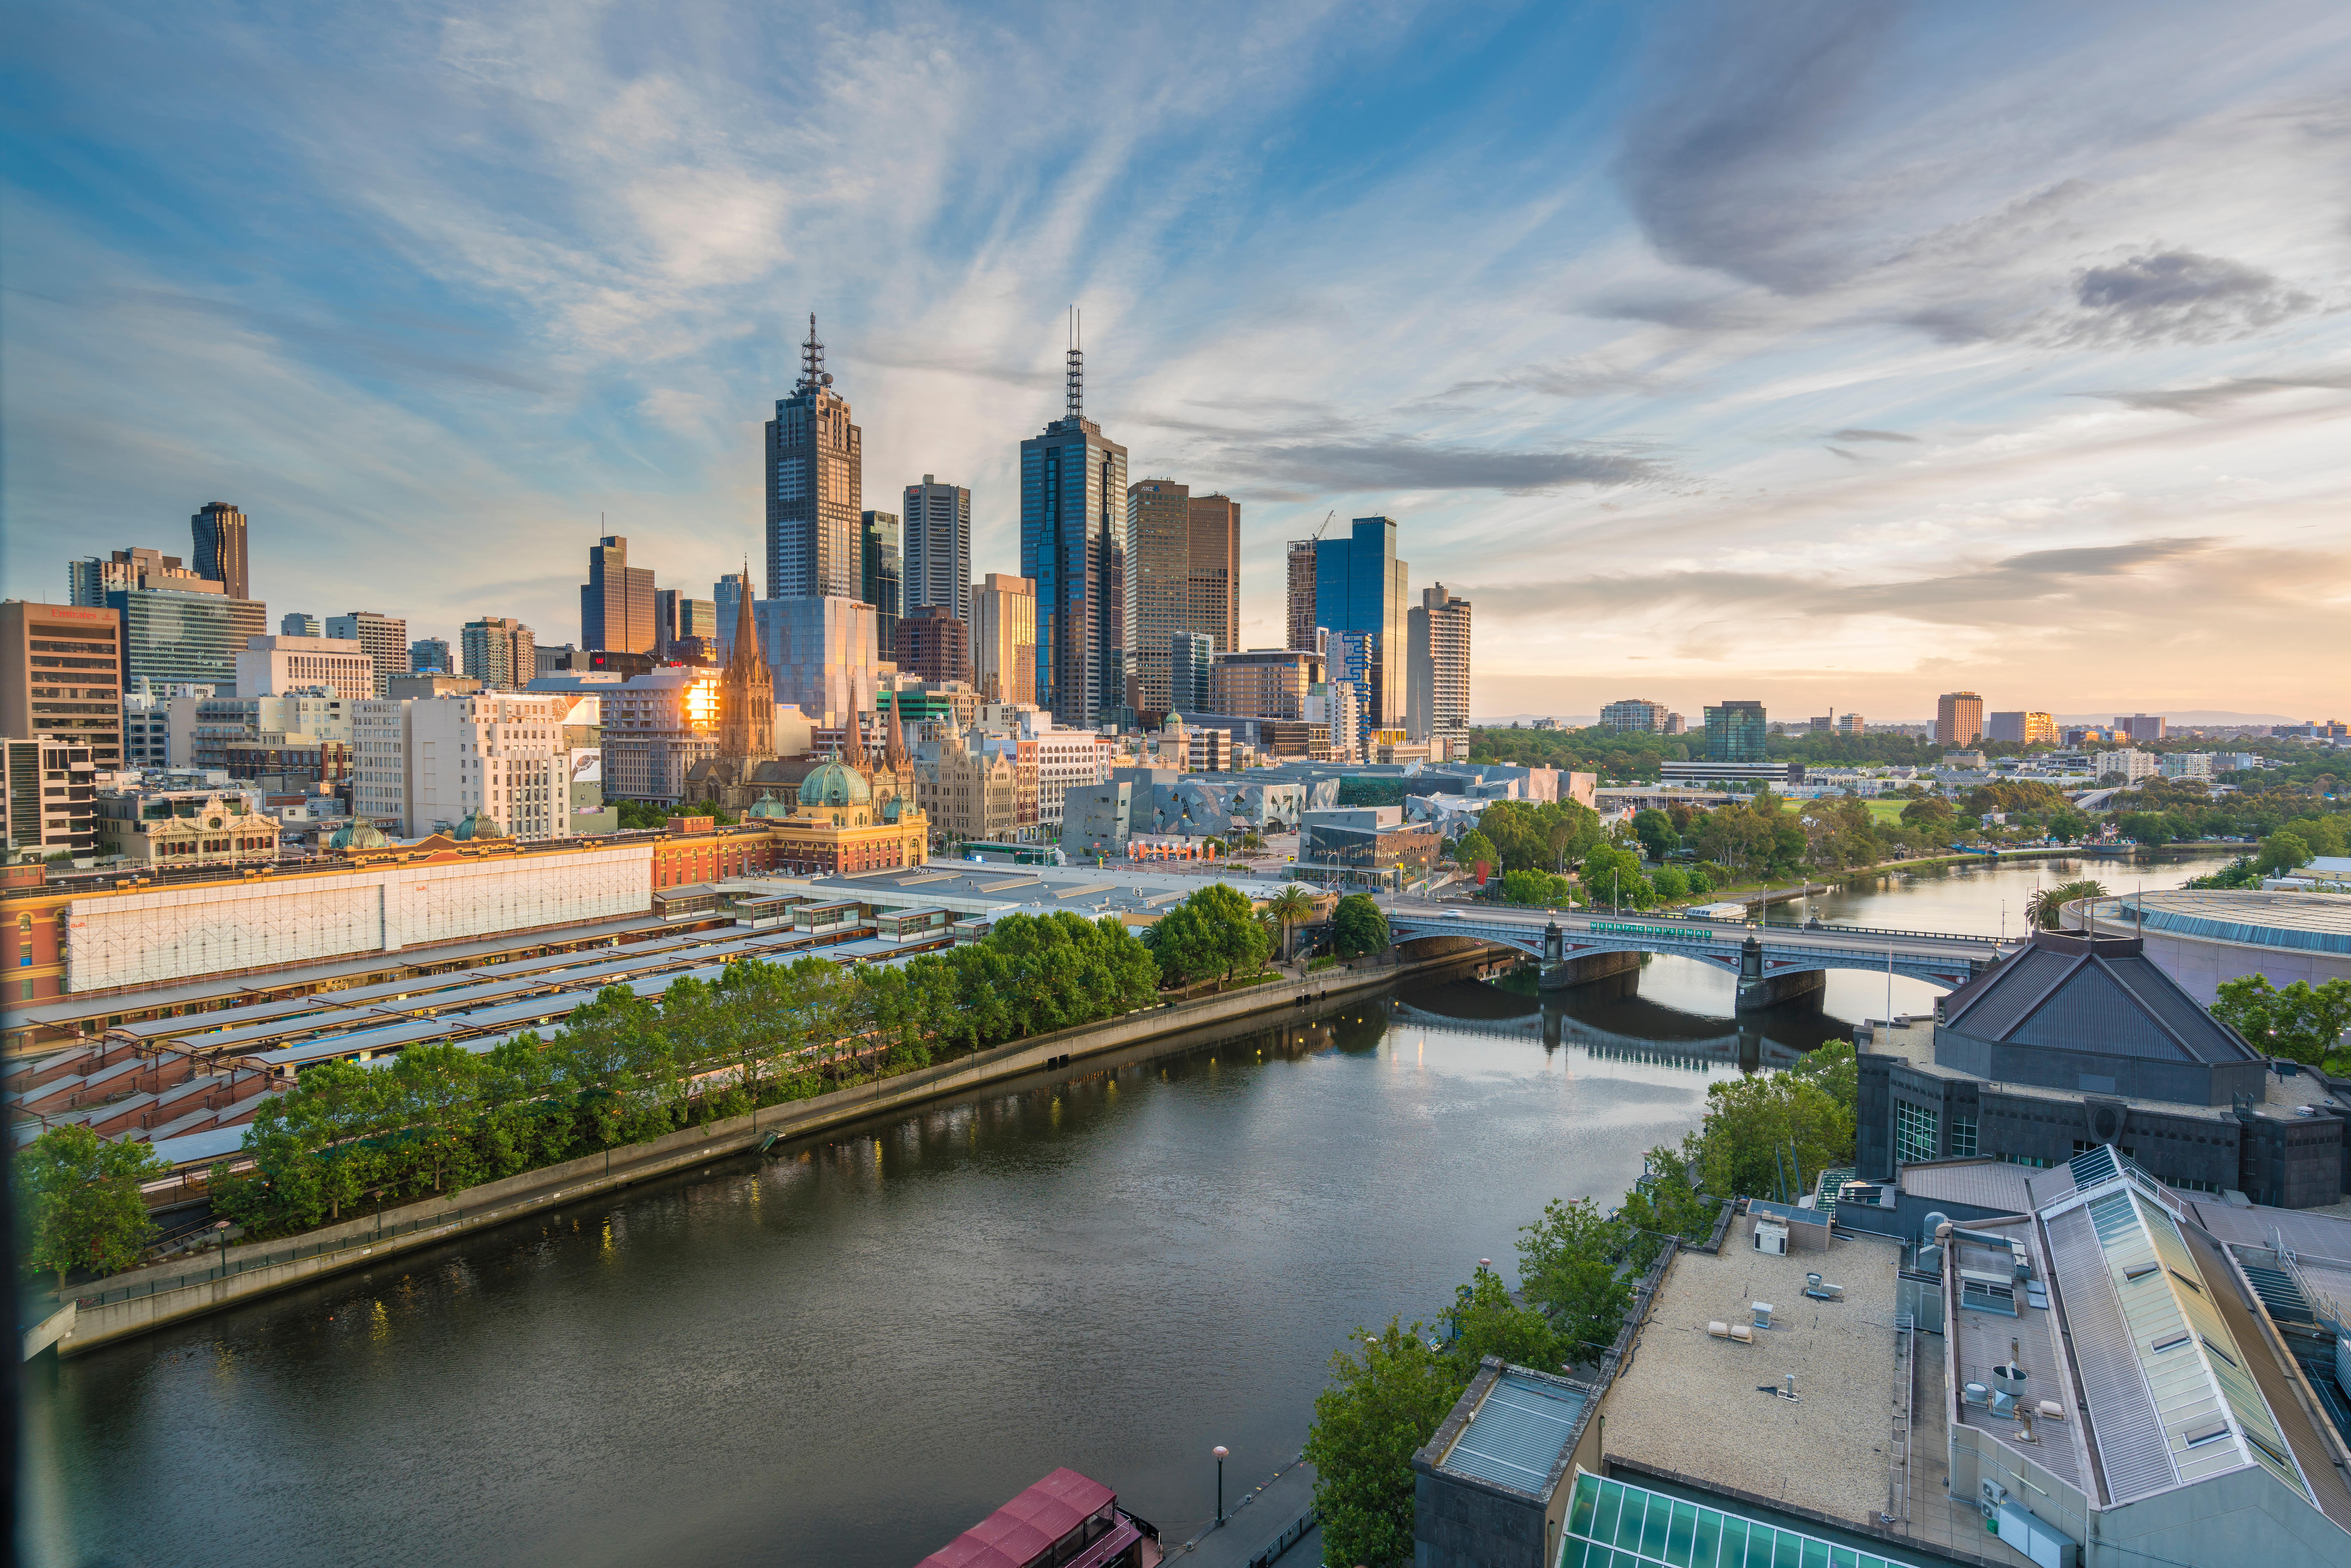 The Melbourne skyline